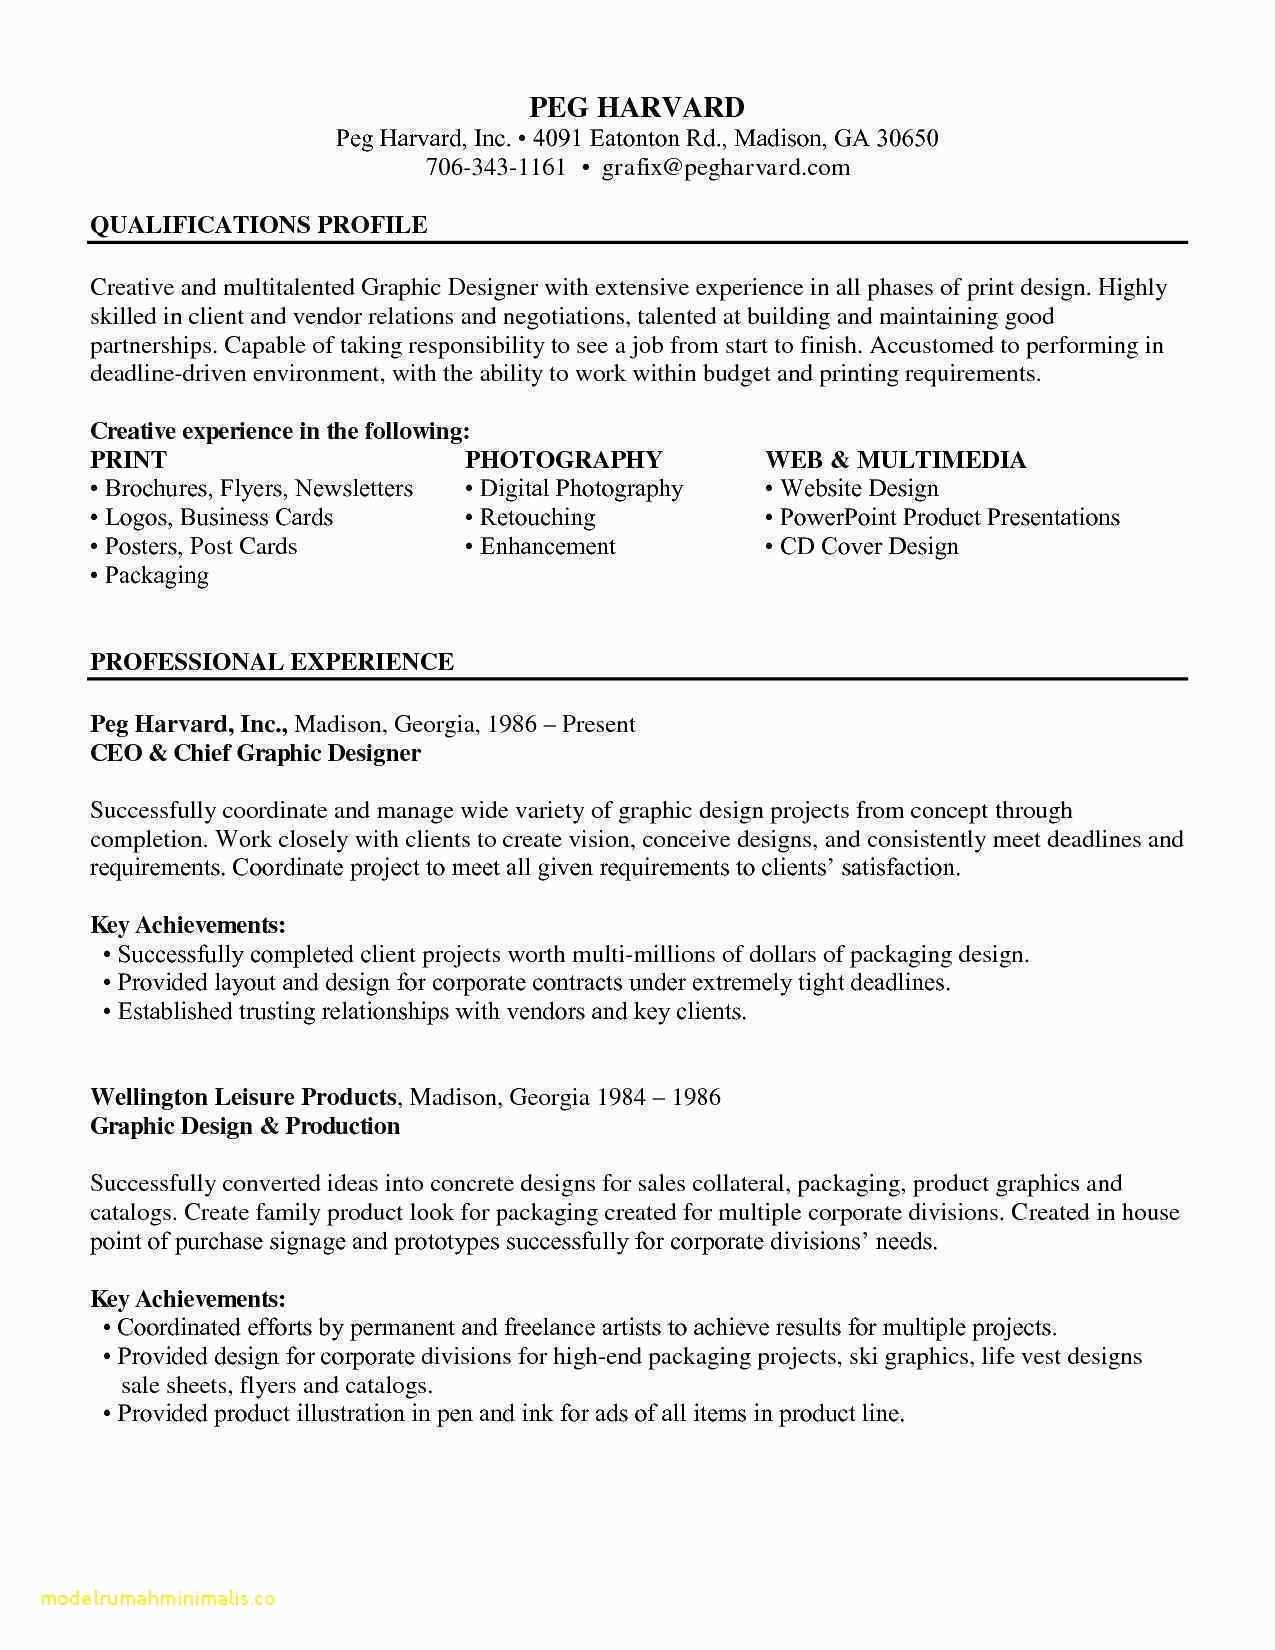 cv-template-harvard-resume-format